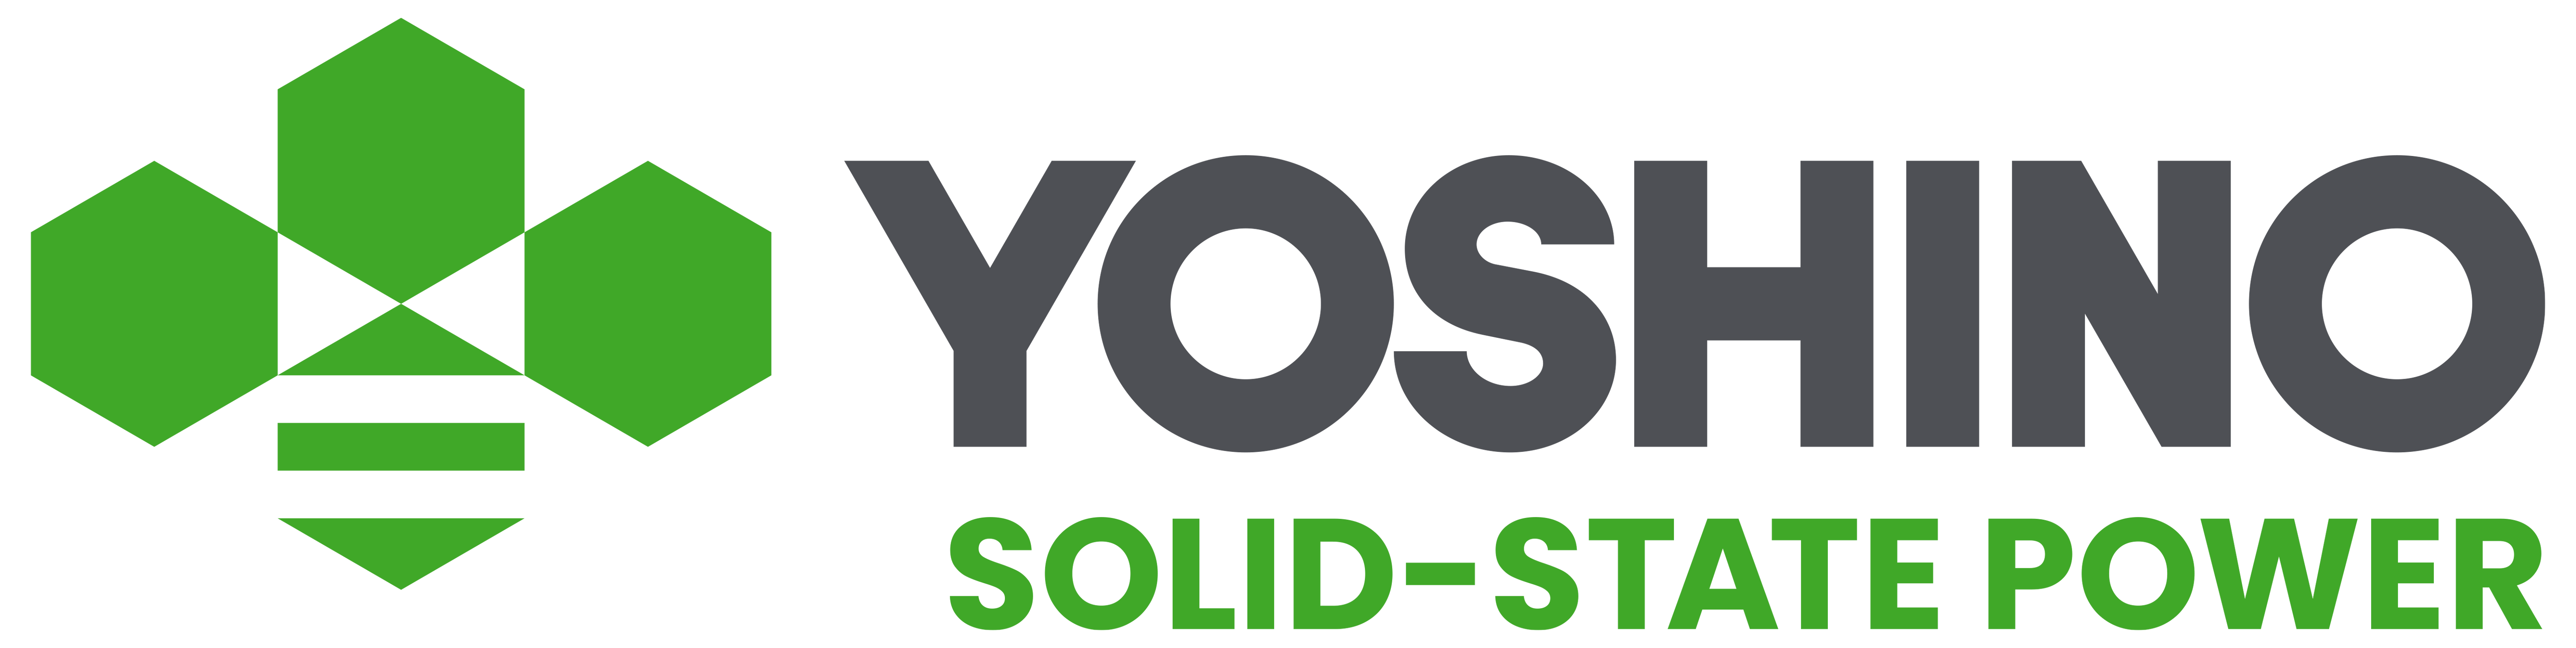 Yoshino Power Logo - Dark Gray with Green 'Solid-State Power' Text"